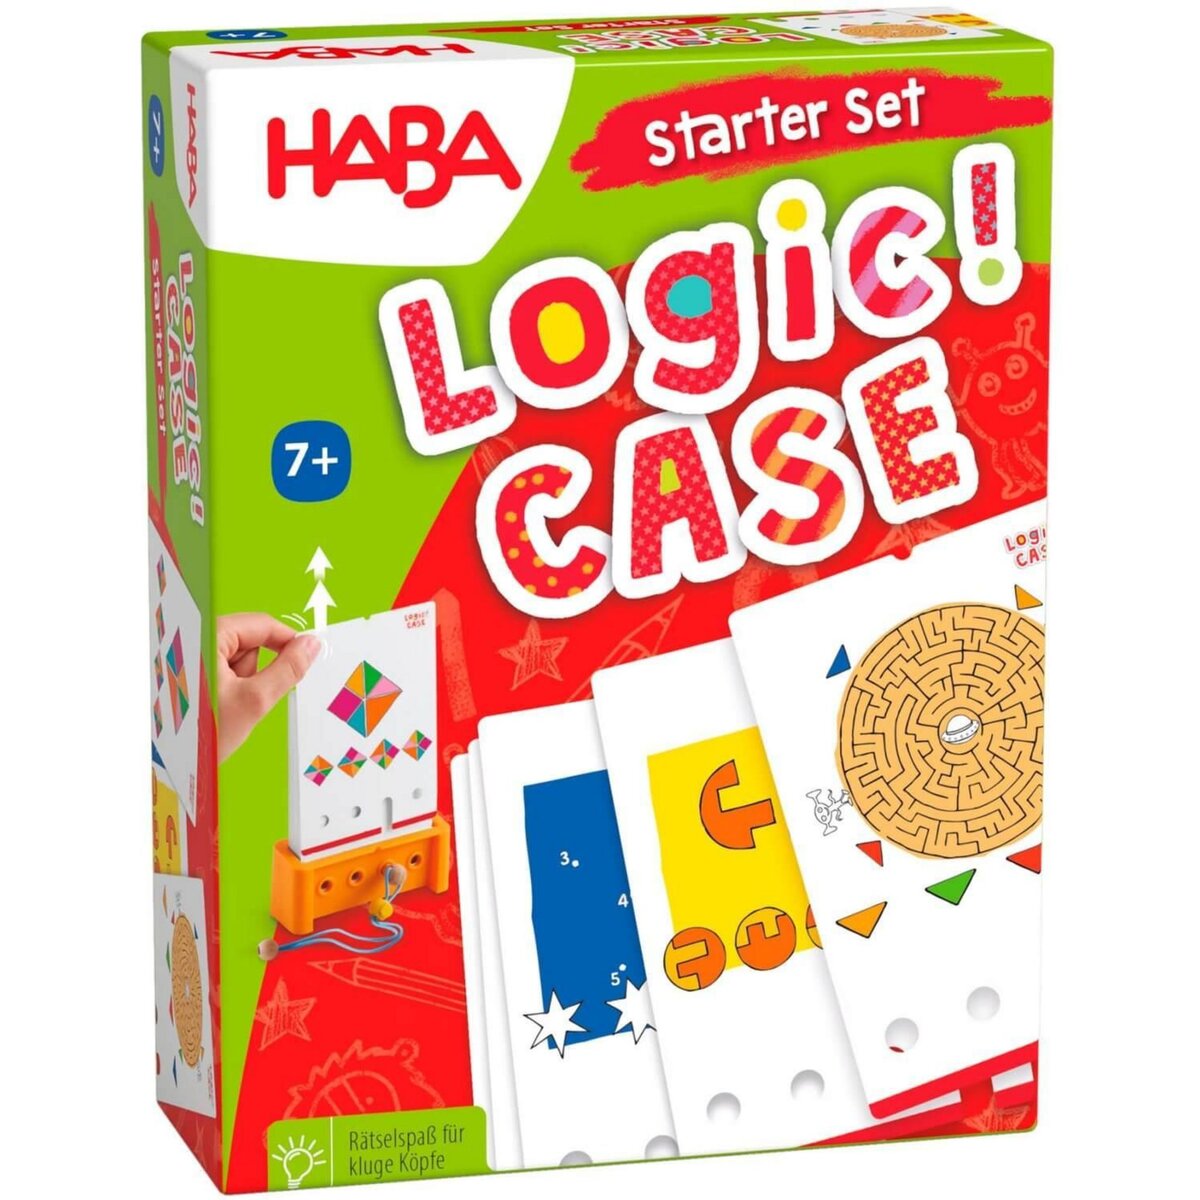 Haba Logic! CASE Starter Set